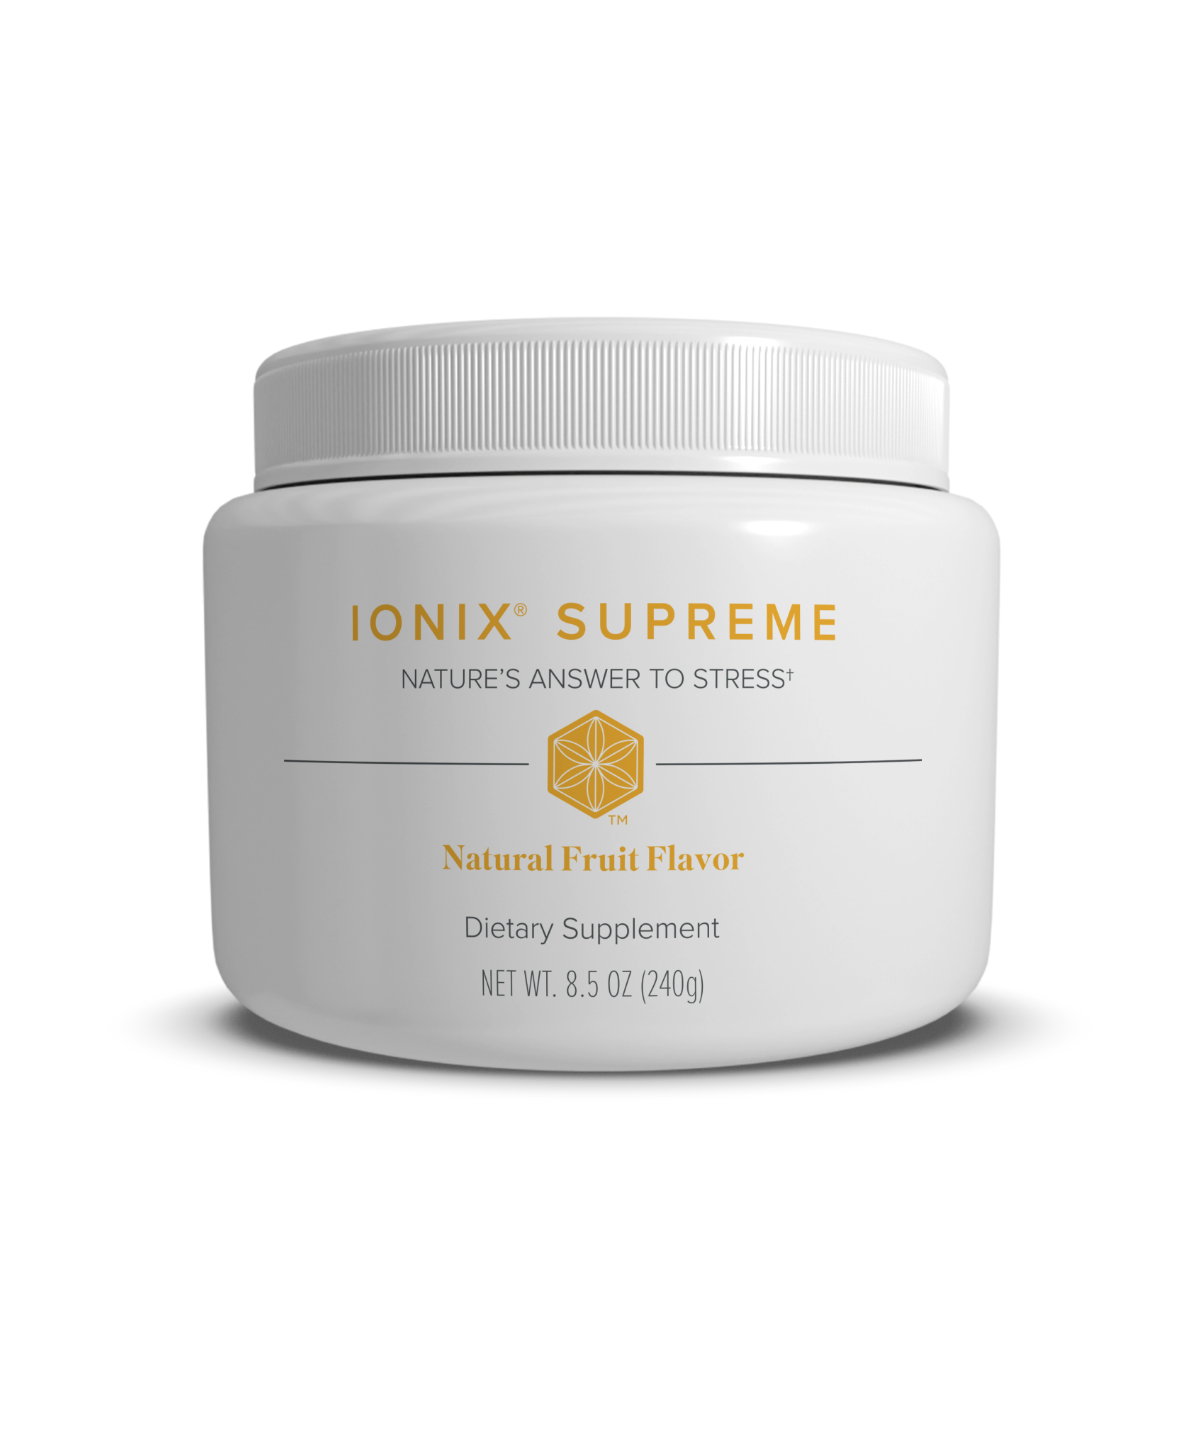 Ionix® Supreme Natural Fruit Flavor Canister